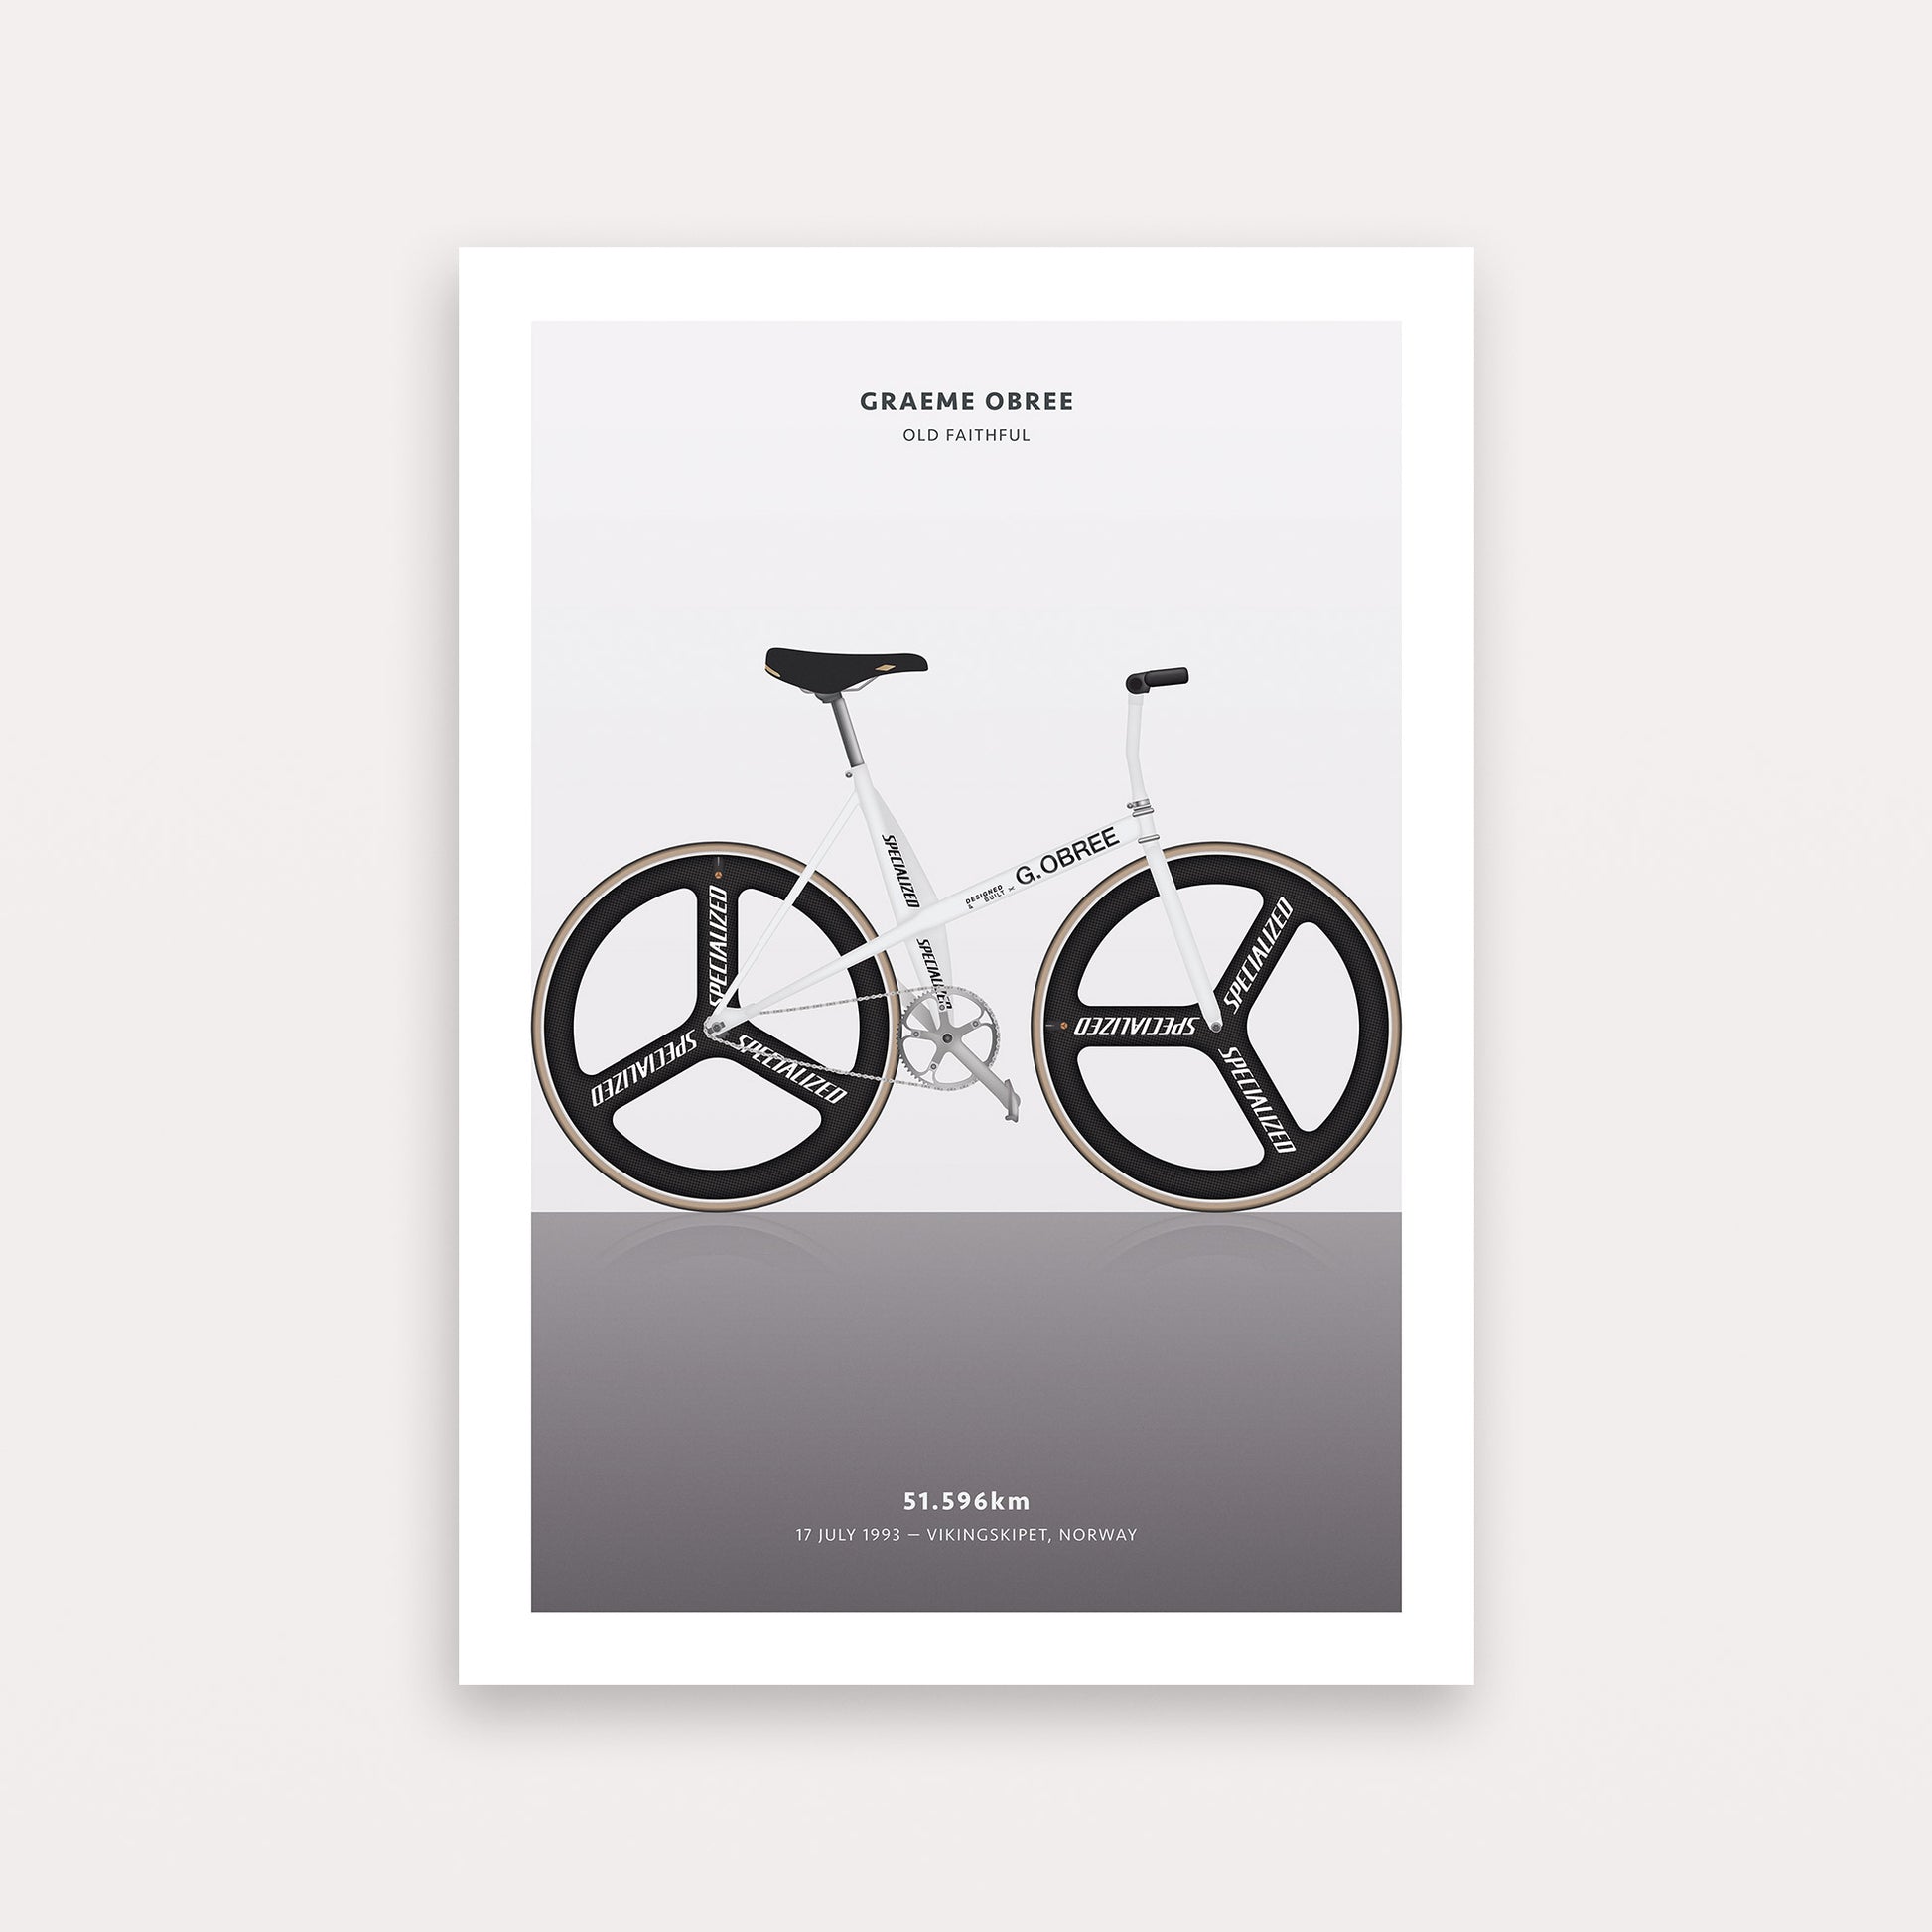 Graeme Obree Hour Record – Poster – The English Cyclist